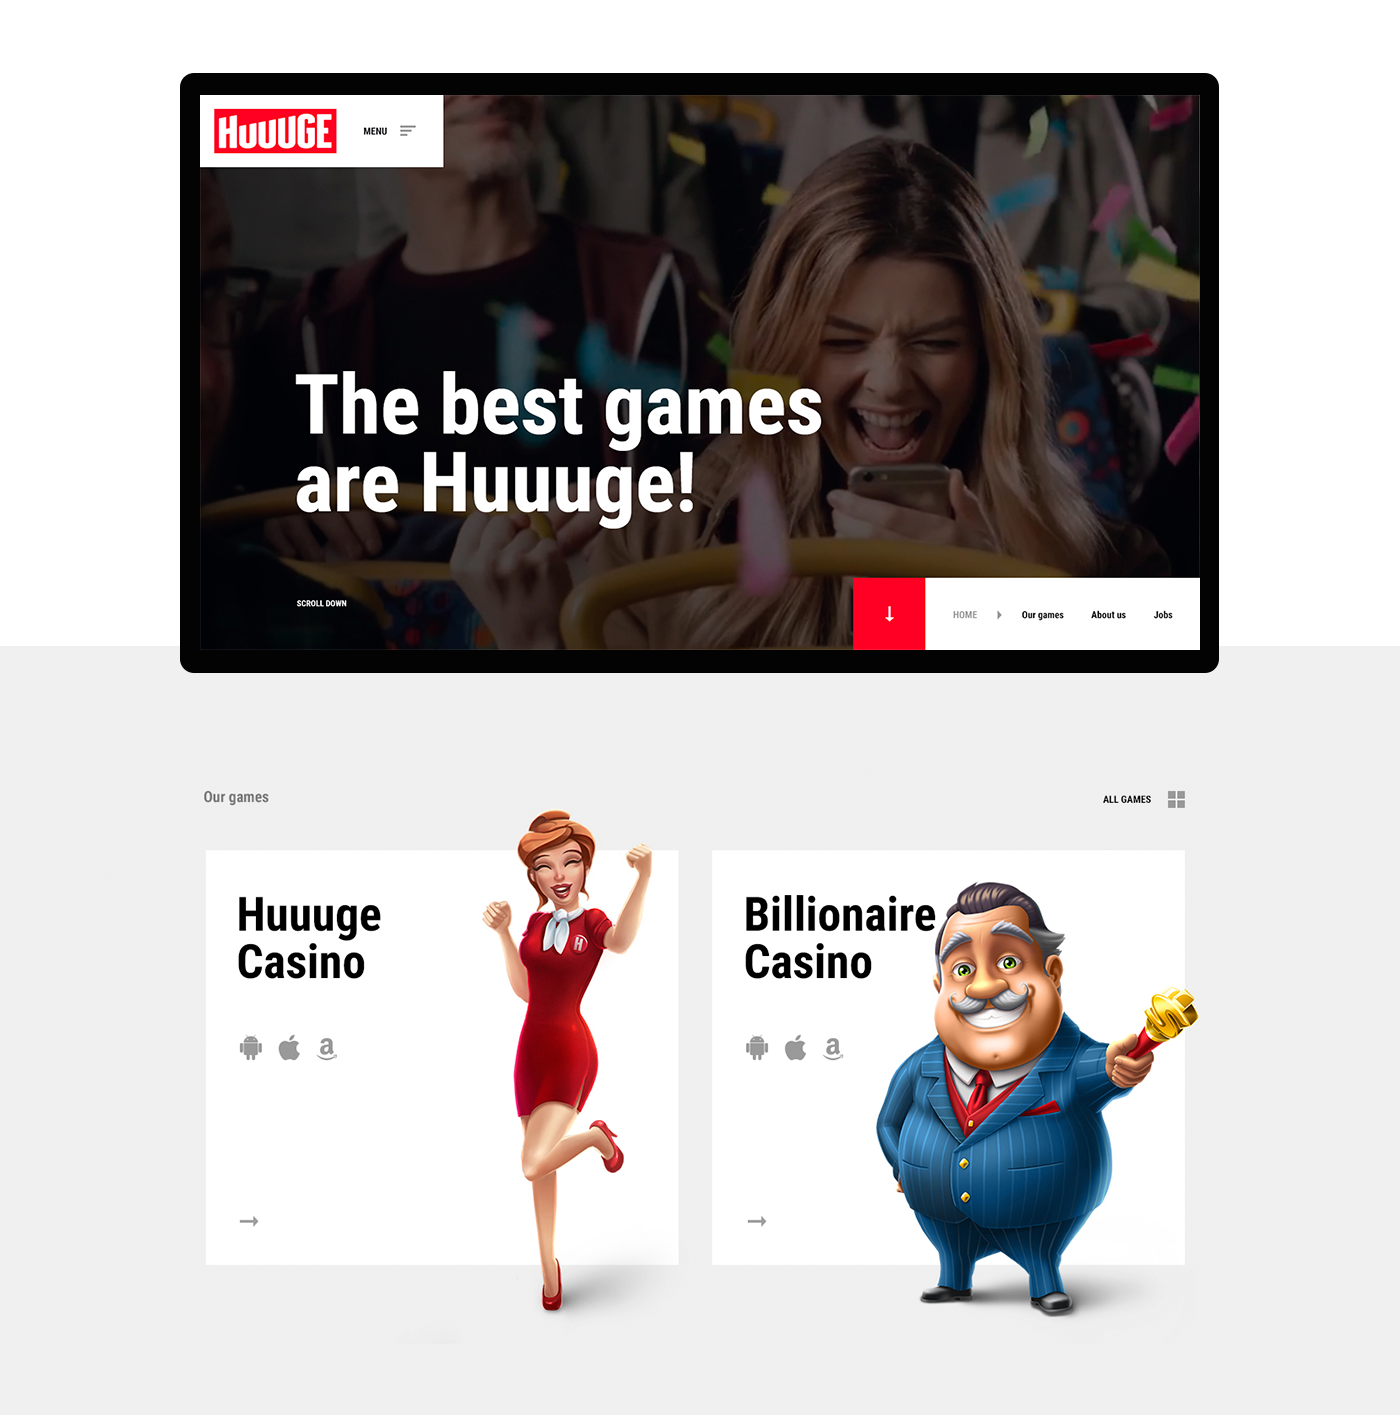 huuuge Games mobile games mobile game challenge dobies socha branding  Webdesign